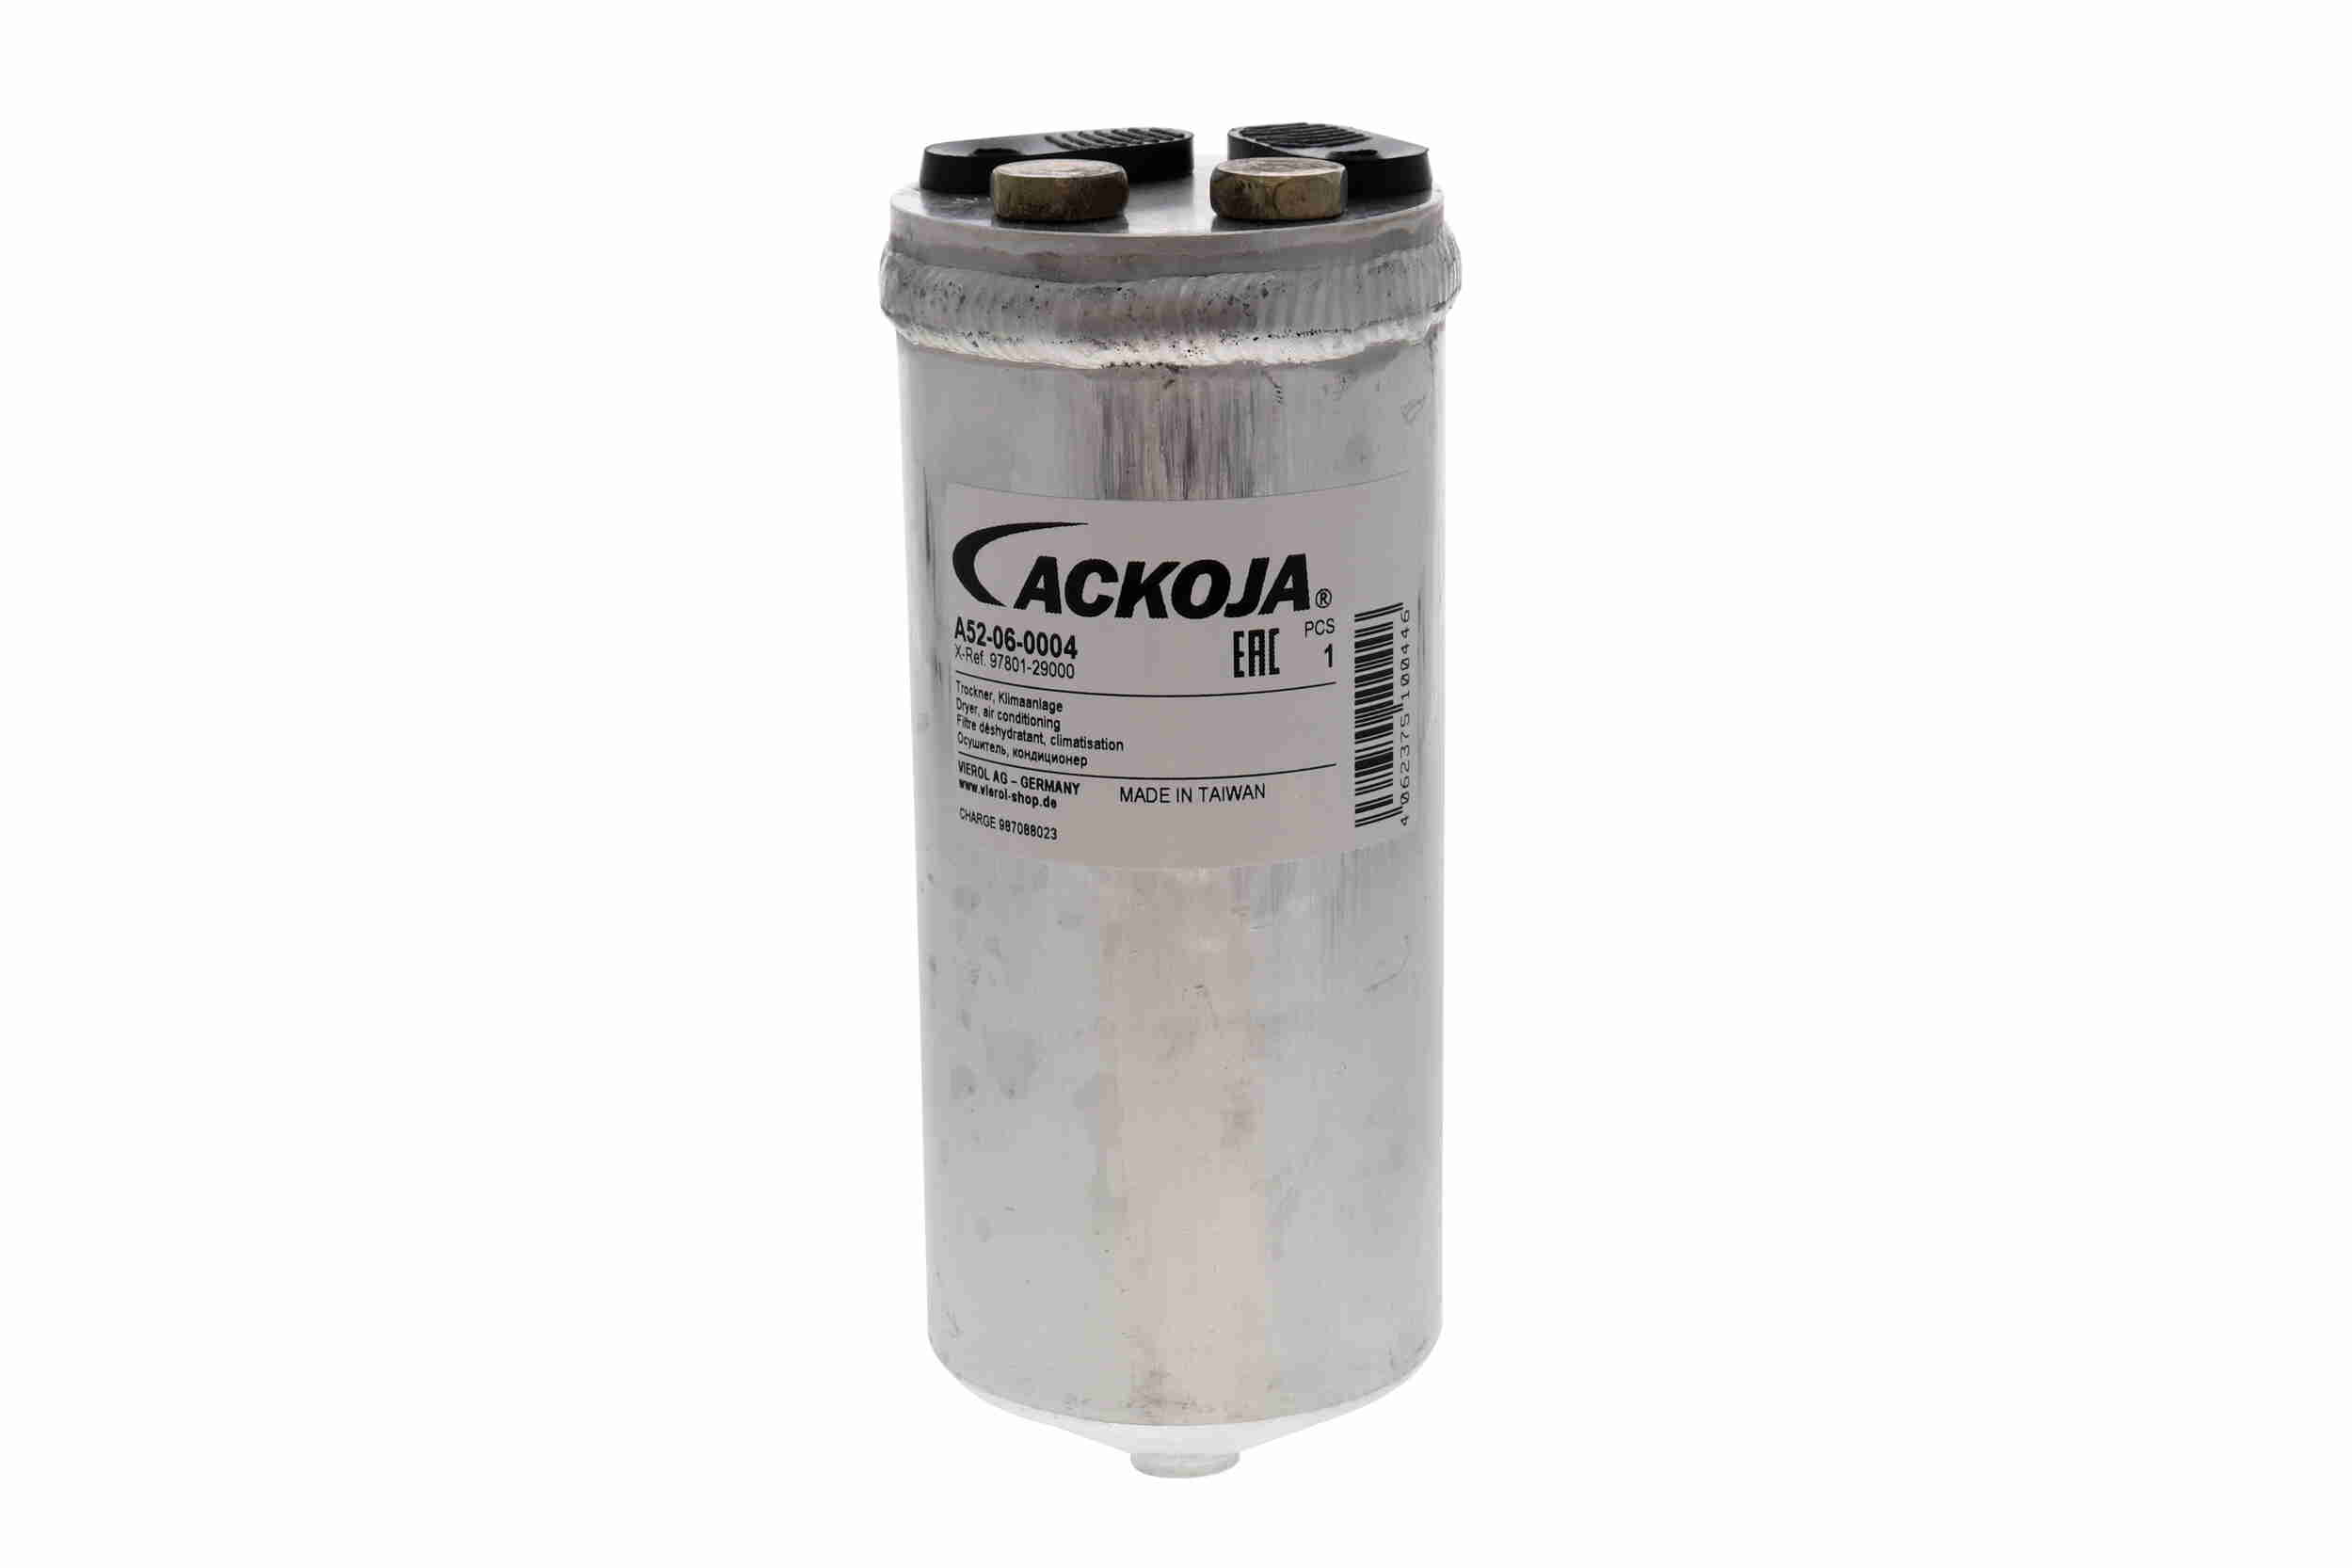 Ackoja Airco droger/filter A52-06-0004